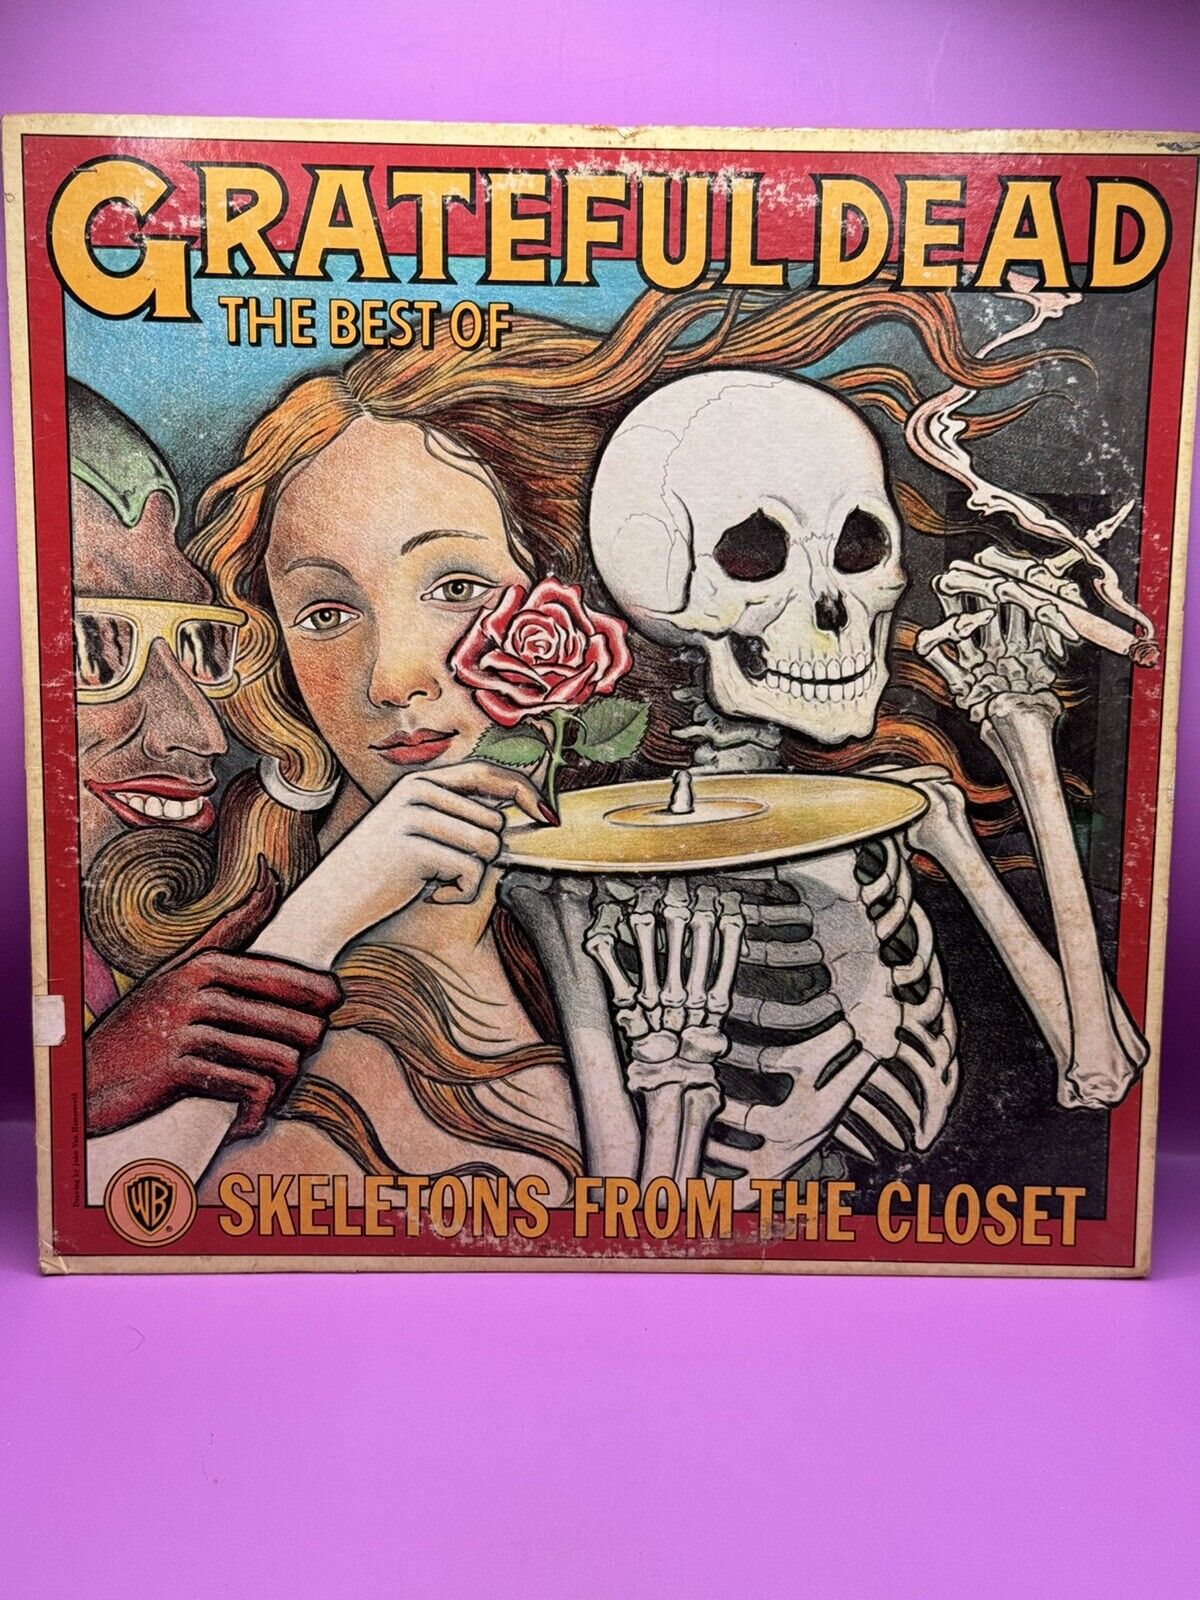 Grateful Dead - Skeletons From The Closet - Vinyl LP - WB W2764 - 1974 - VG/VG